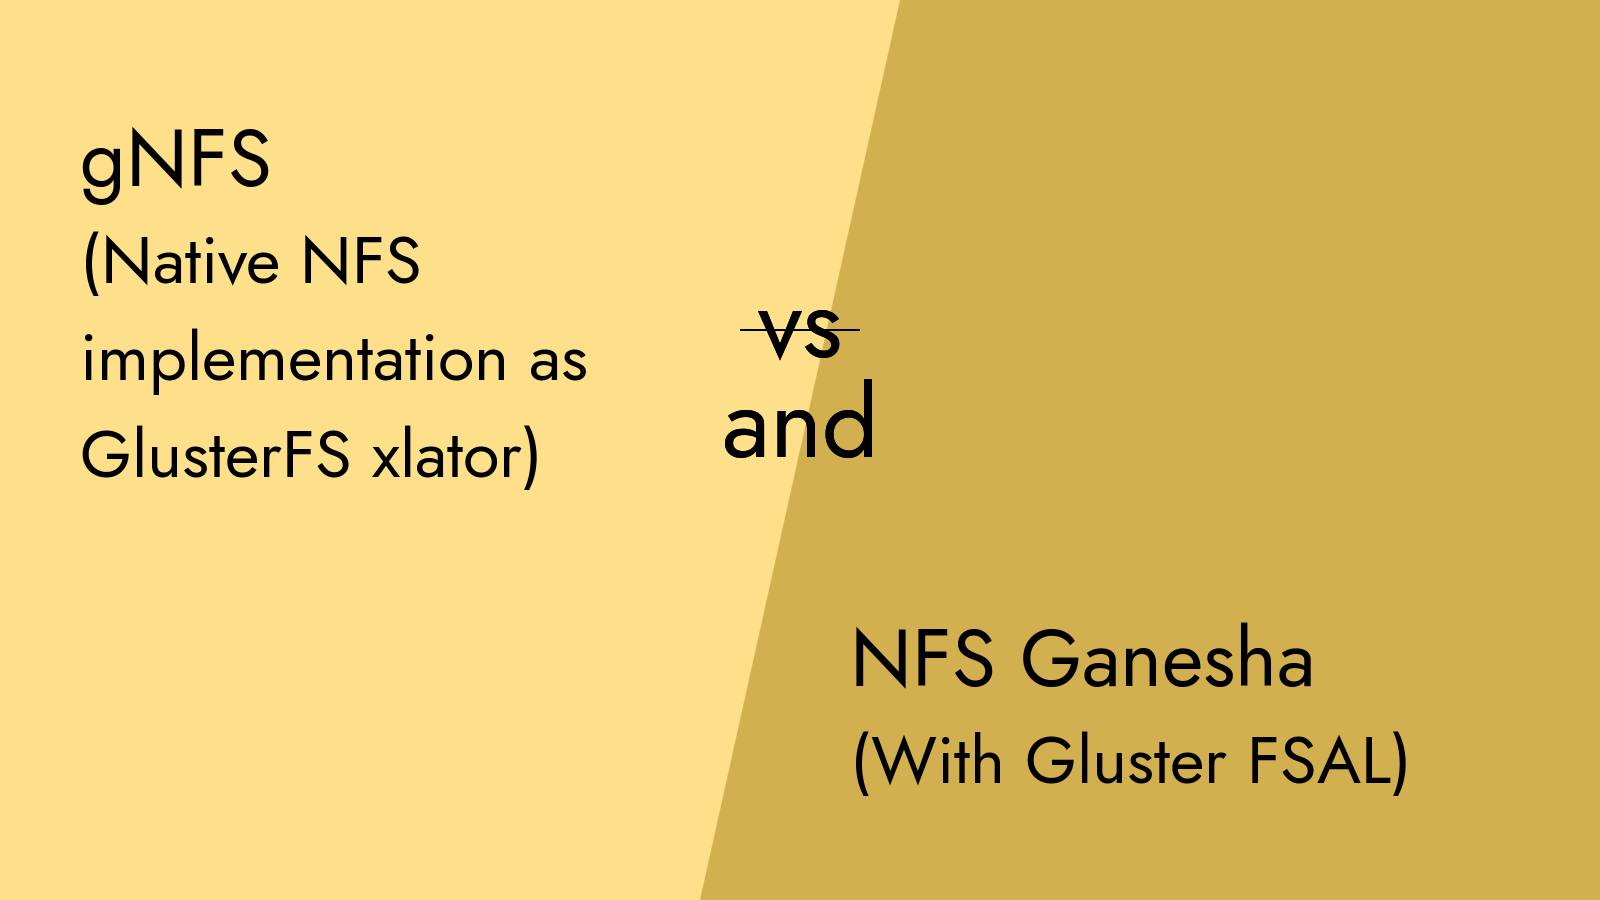 Gnfs and NFS Ganesha